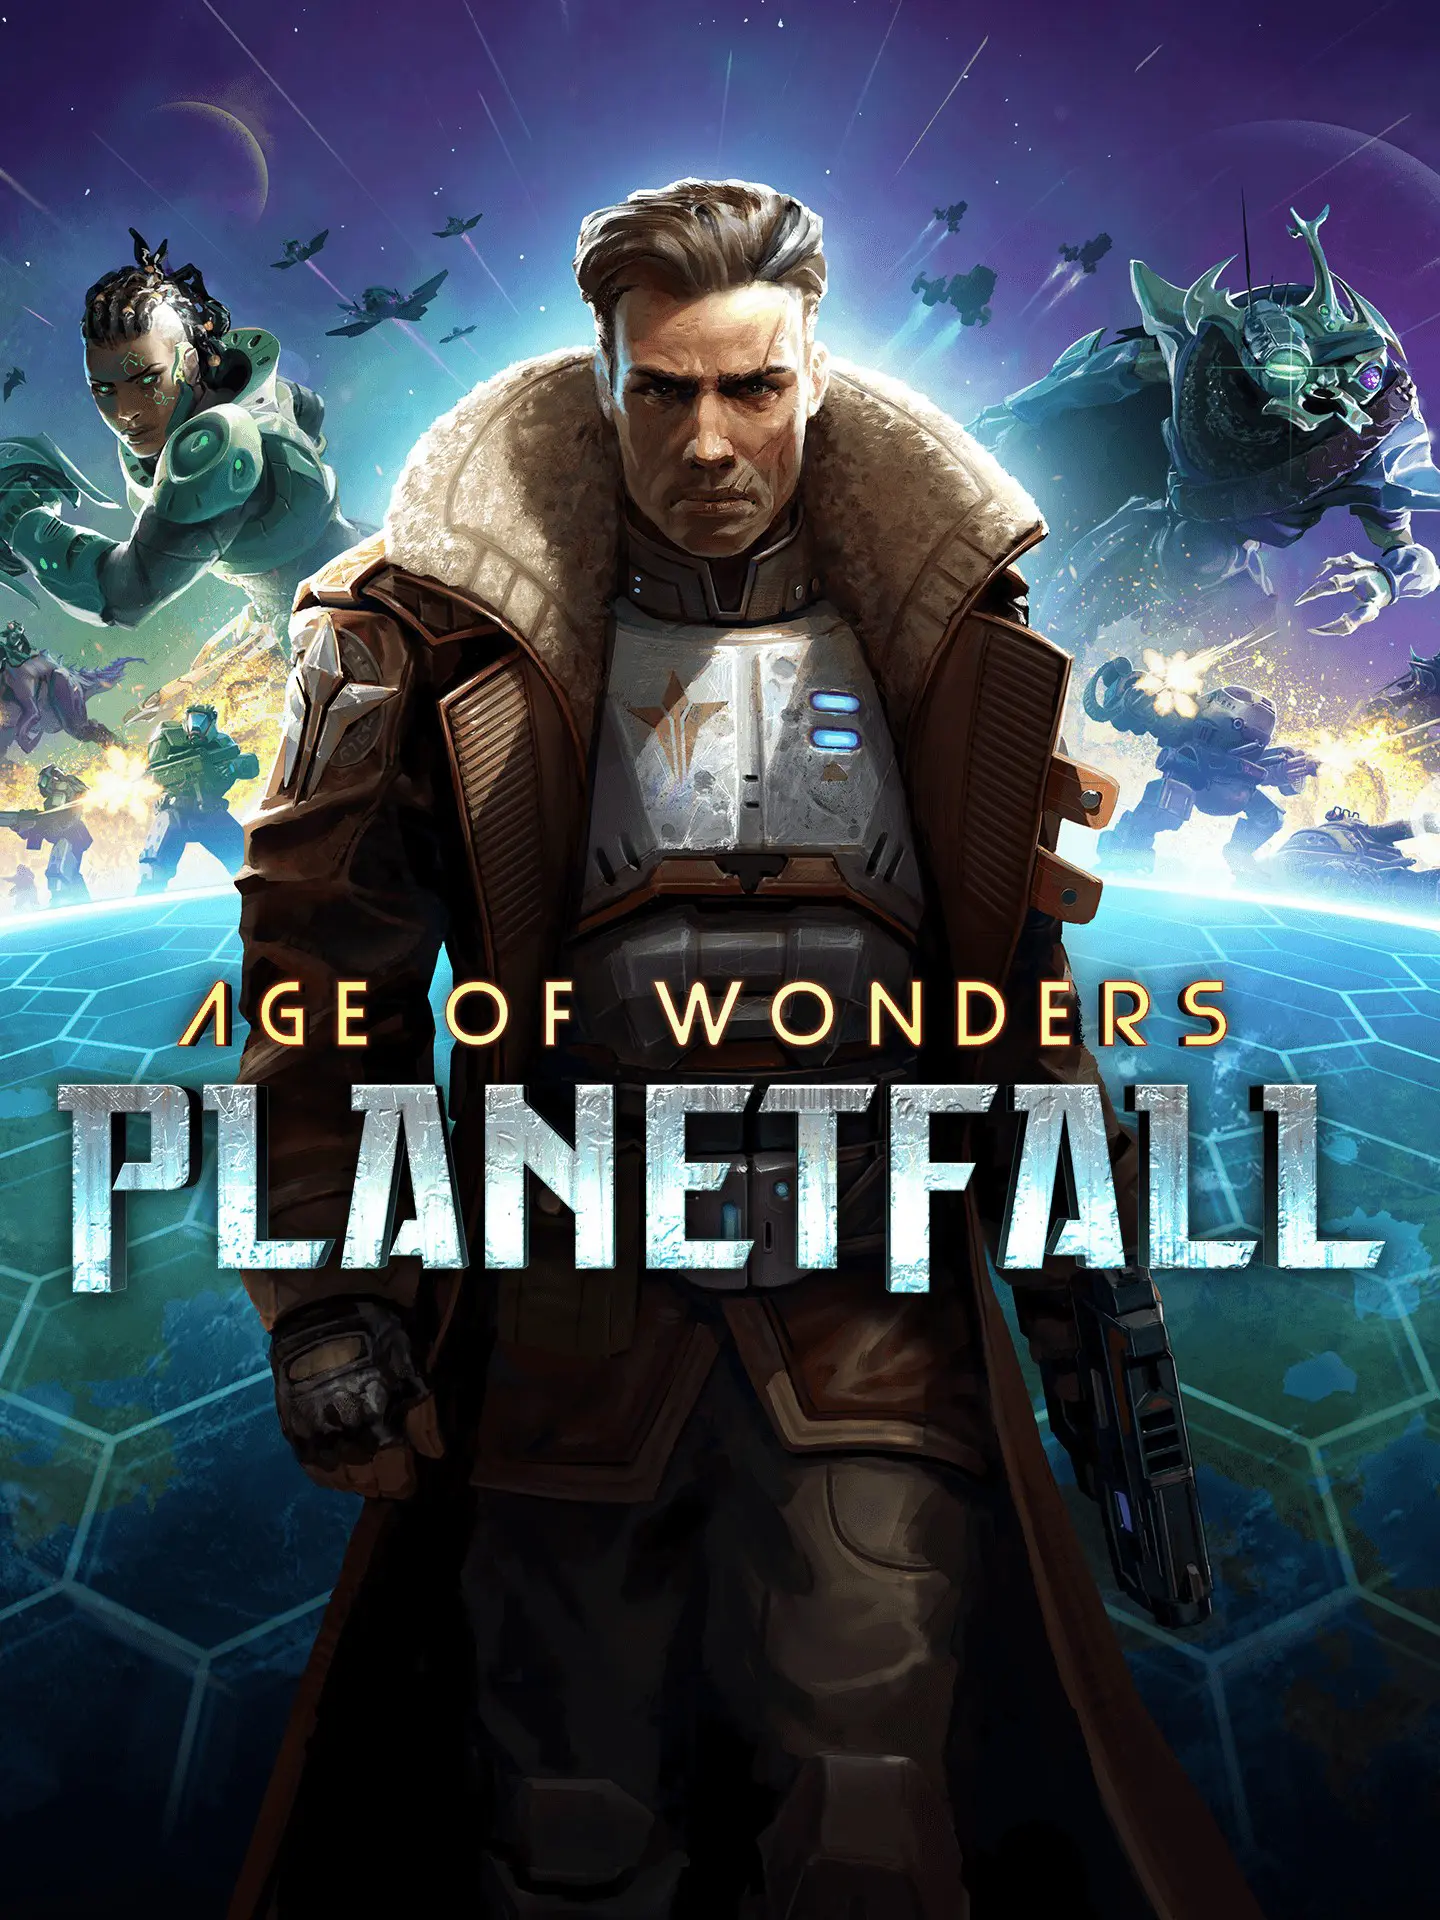 Age of Wonders: Planetfall Premium Edition (PC / Mac) - Steam - Digital Code